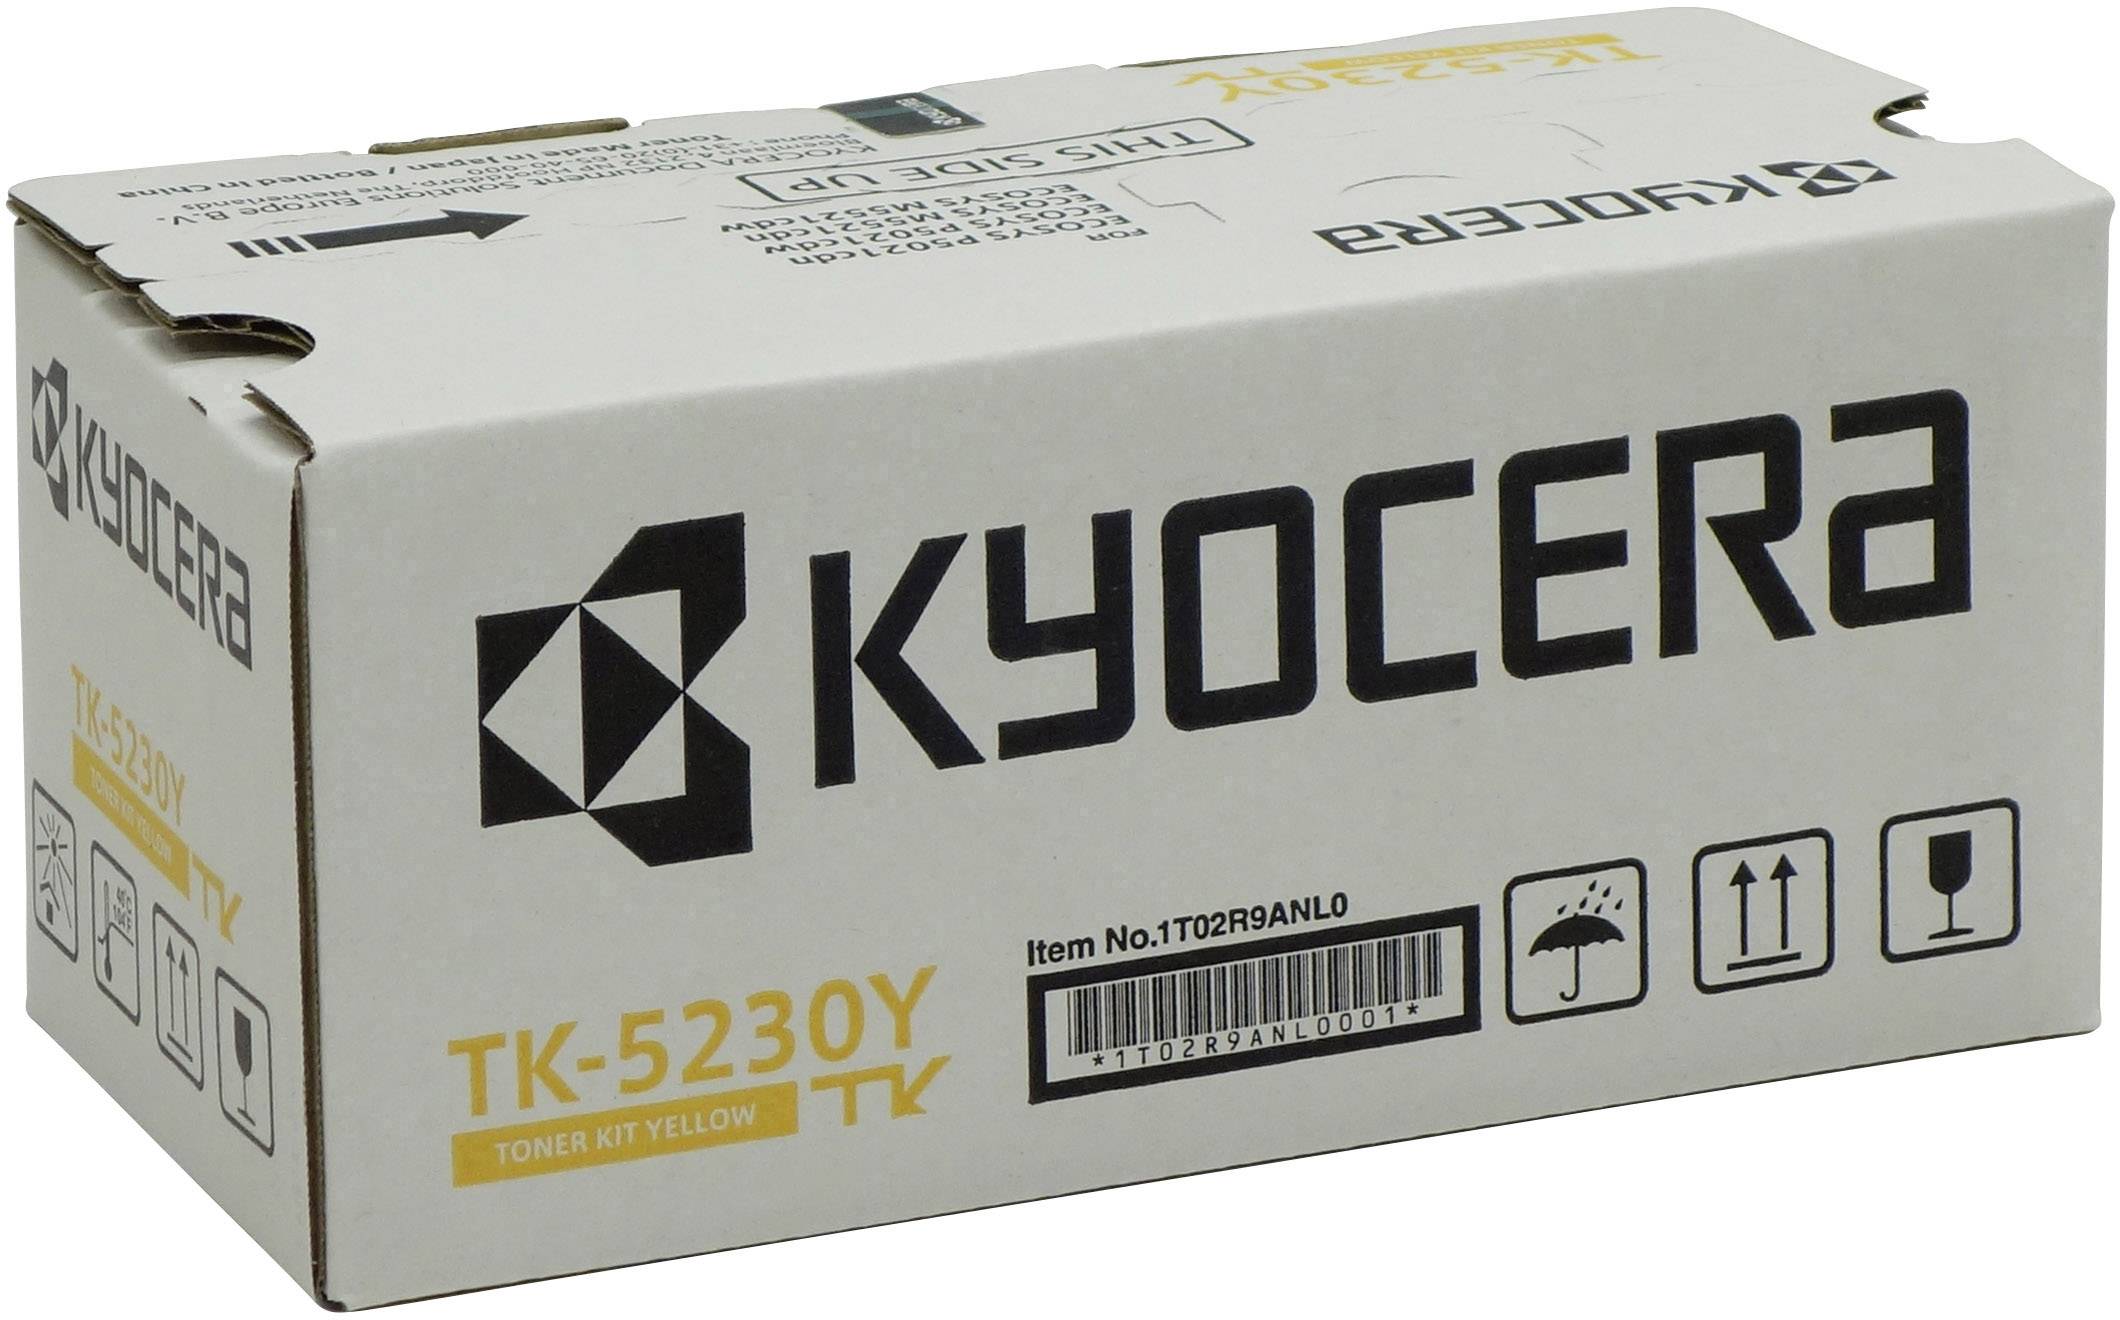 Kyocera TK-5230 Toner Cartridge for Kyocera ECOSYS P5021 and M5521